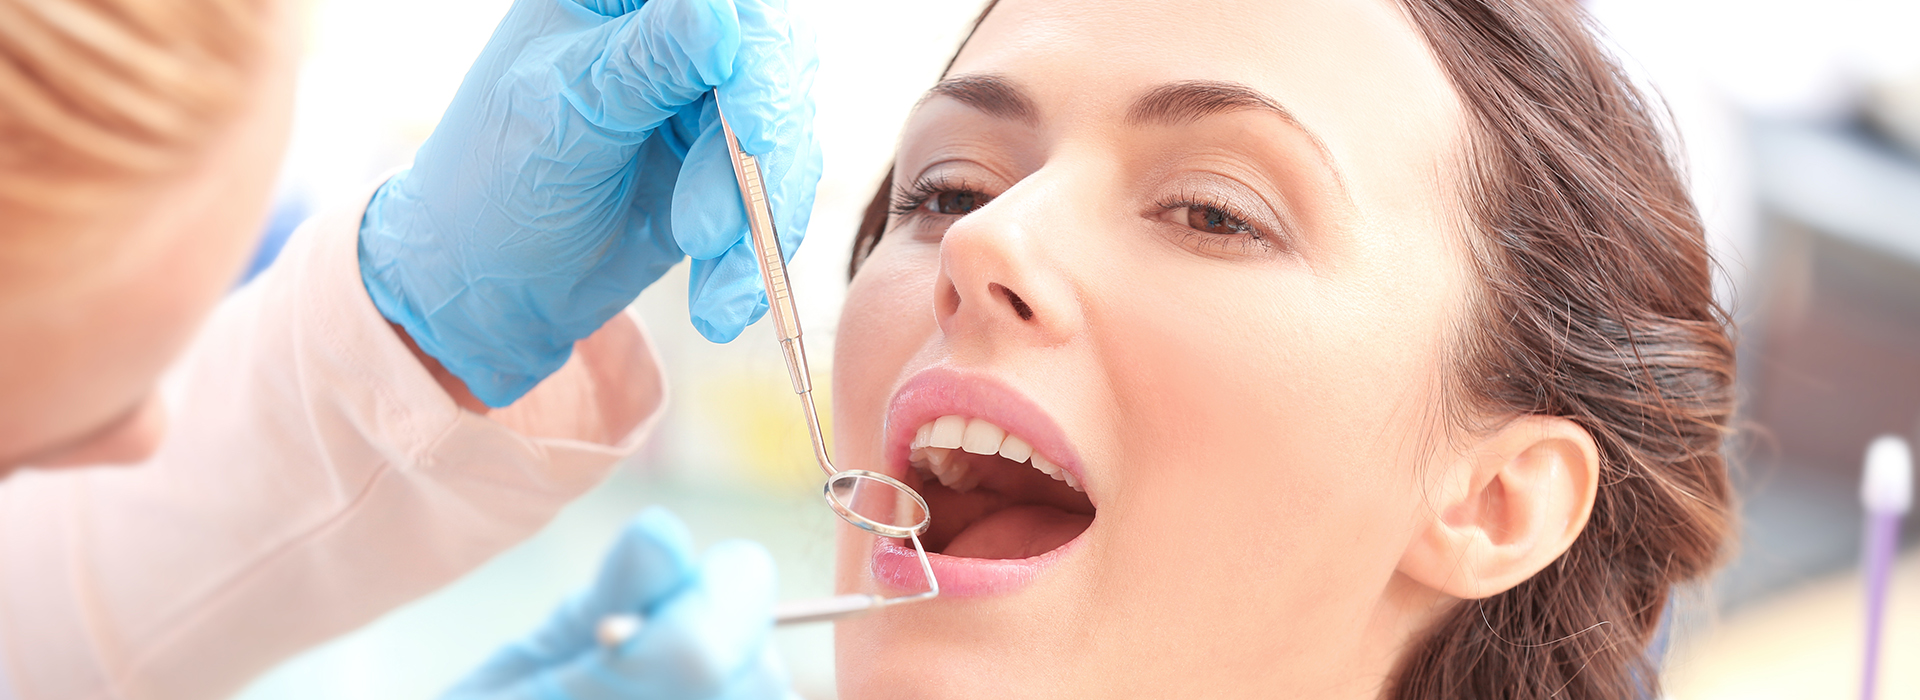 Smile Philosophy Dental Care | Oral Cancer Screening, Oral Exams and Veneers